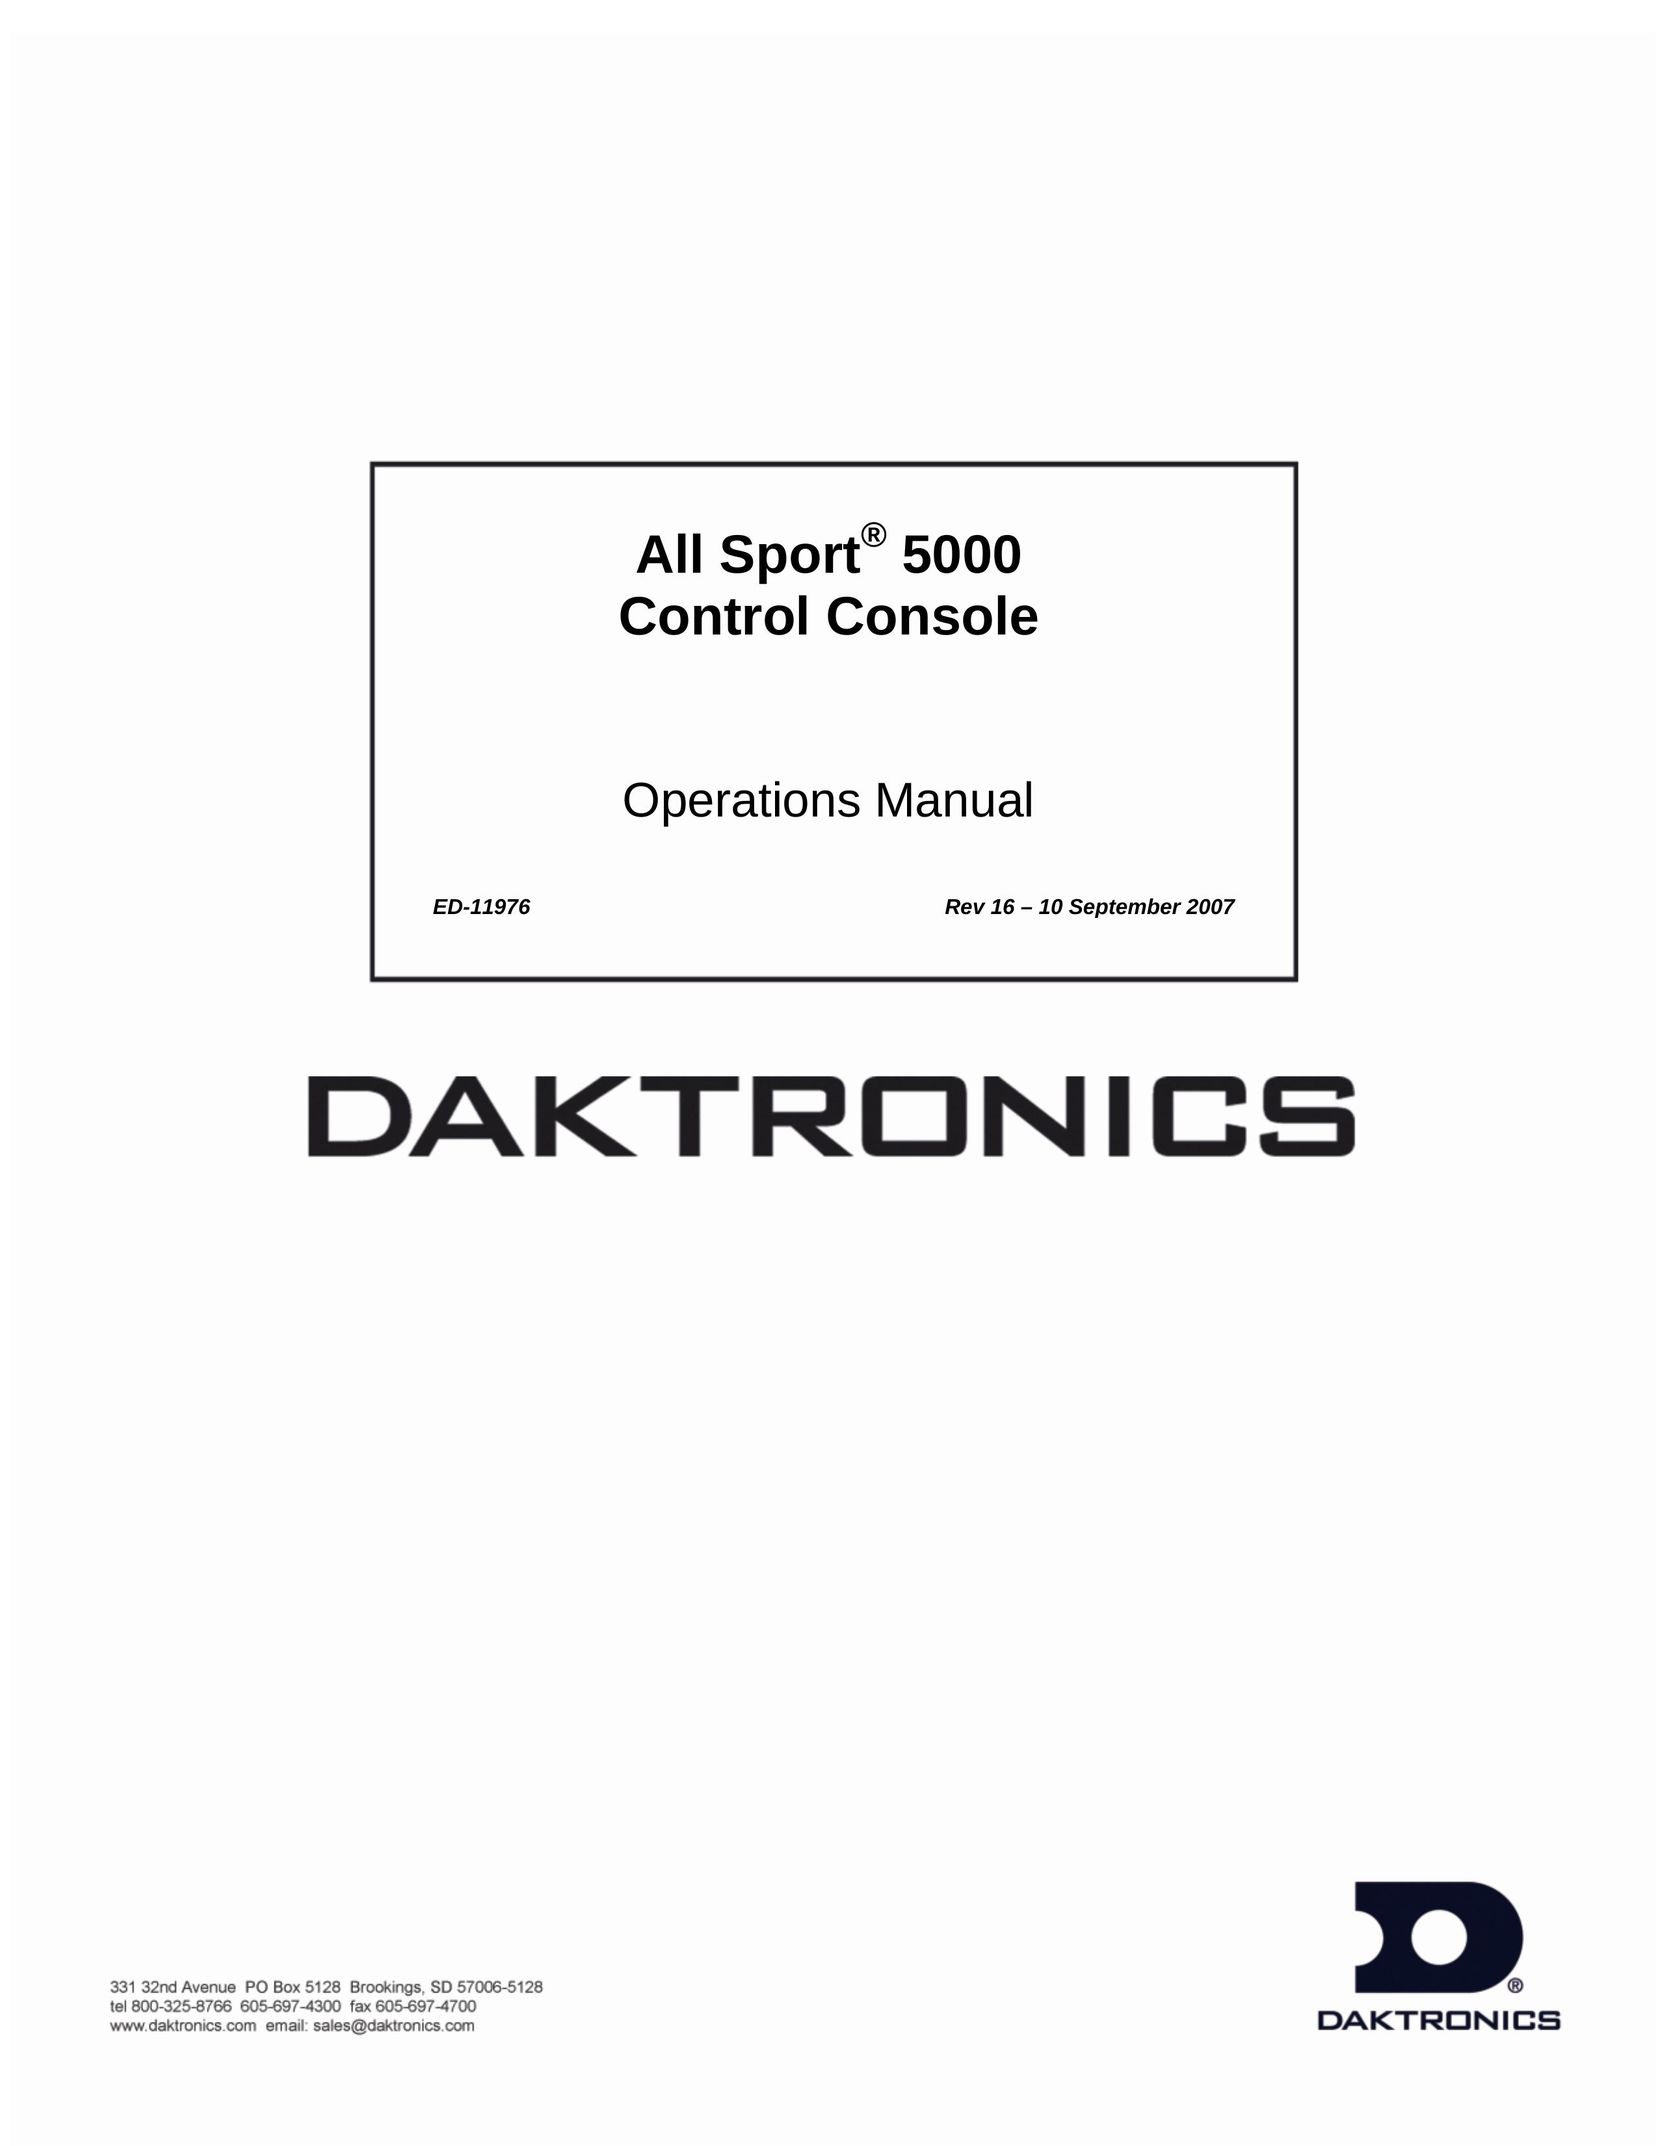 Daktronics All Sport 5000 Fitness Electronics User Manual